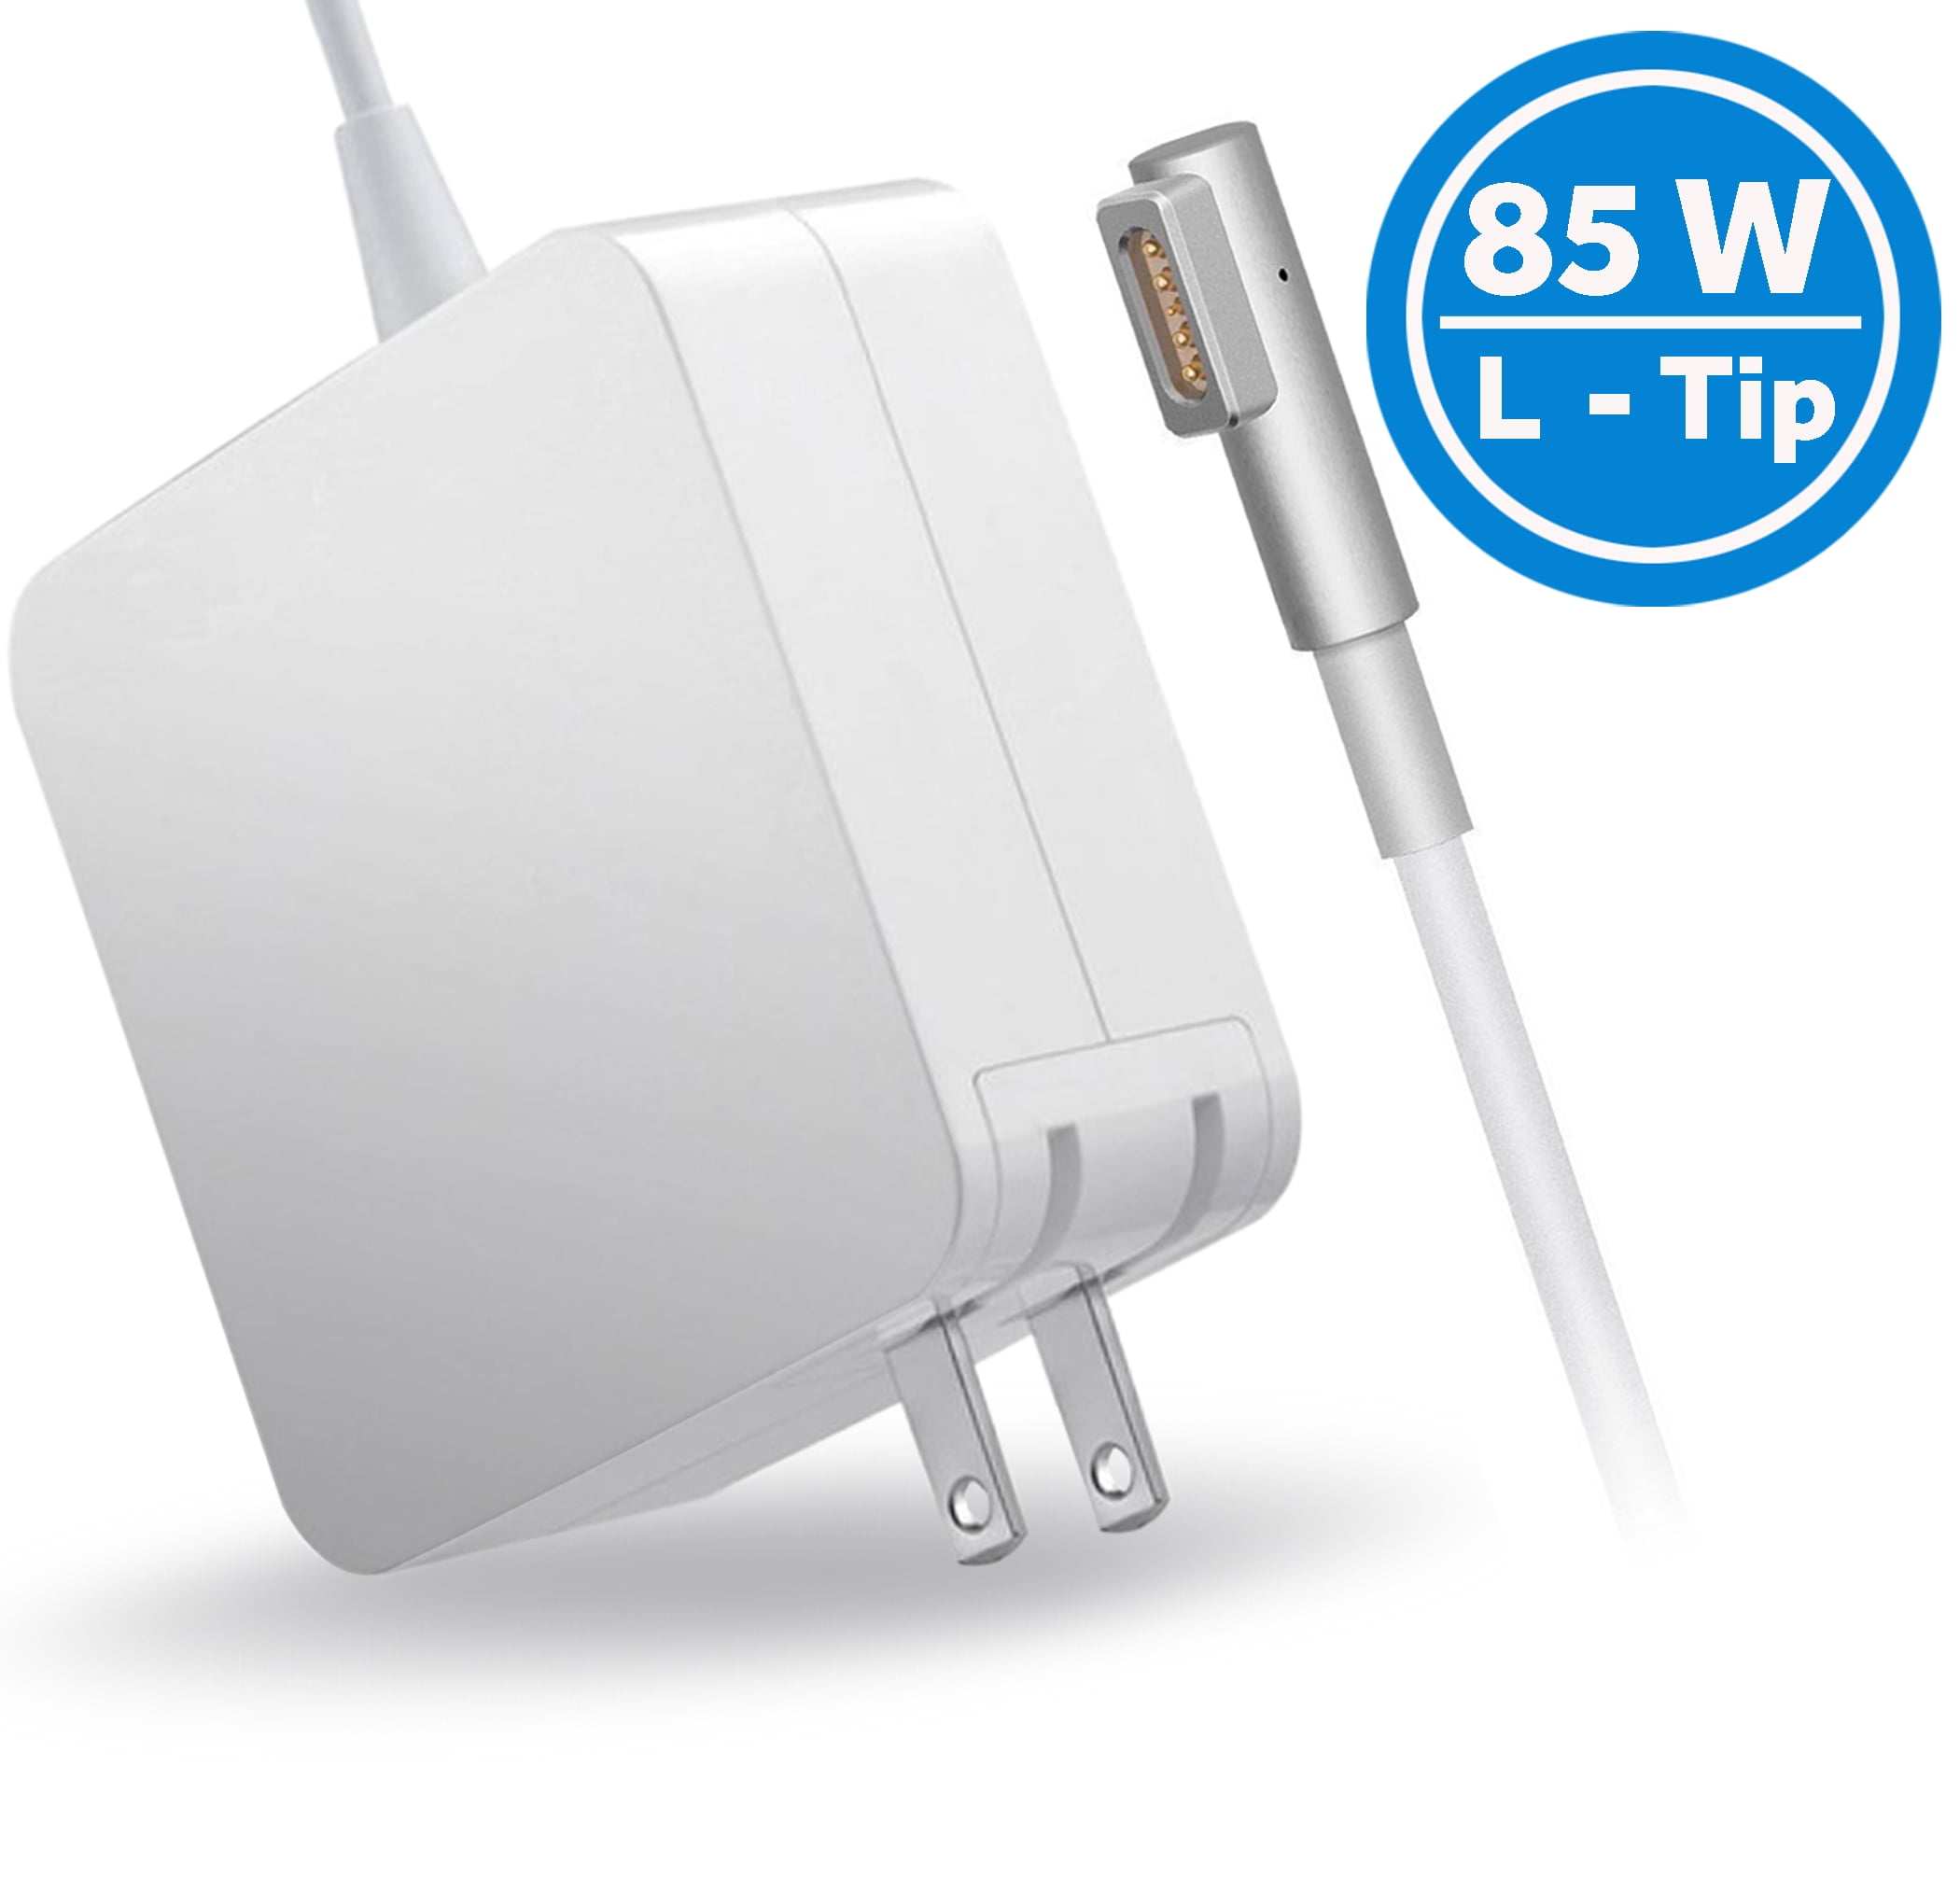 macbook air 13 inch charger walmart